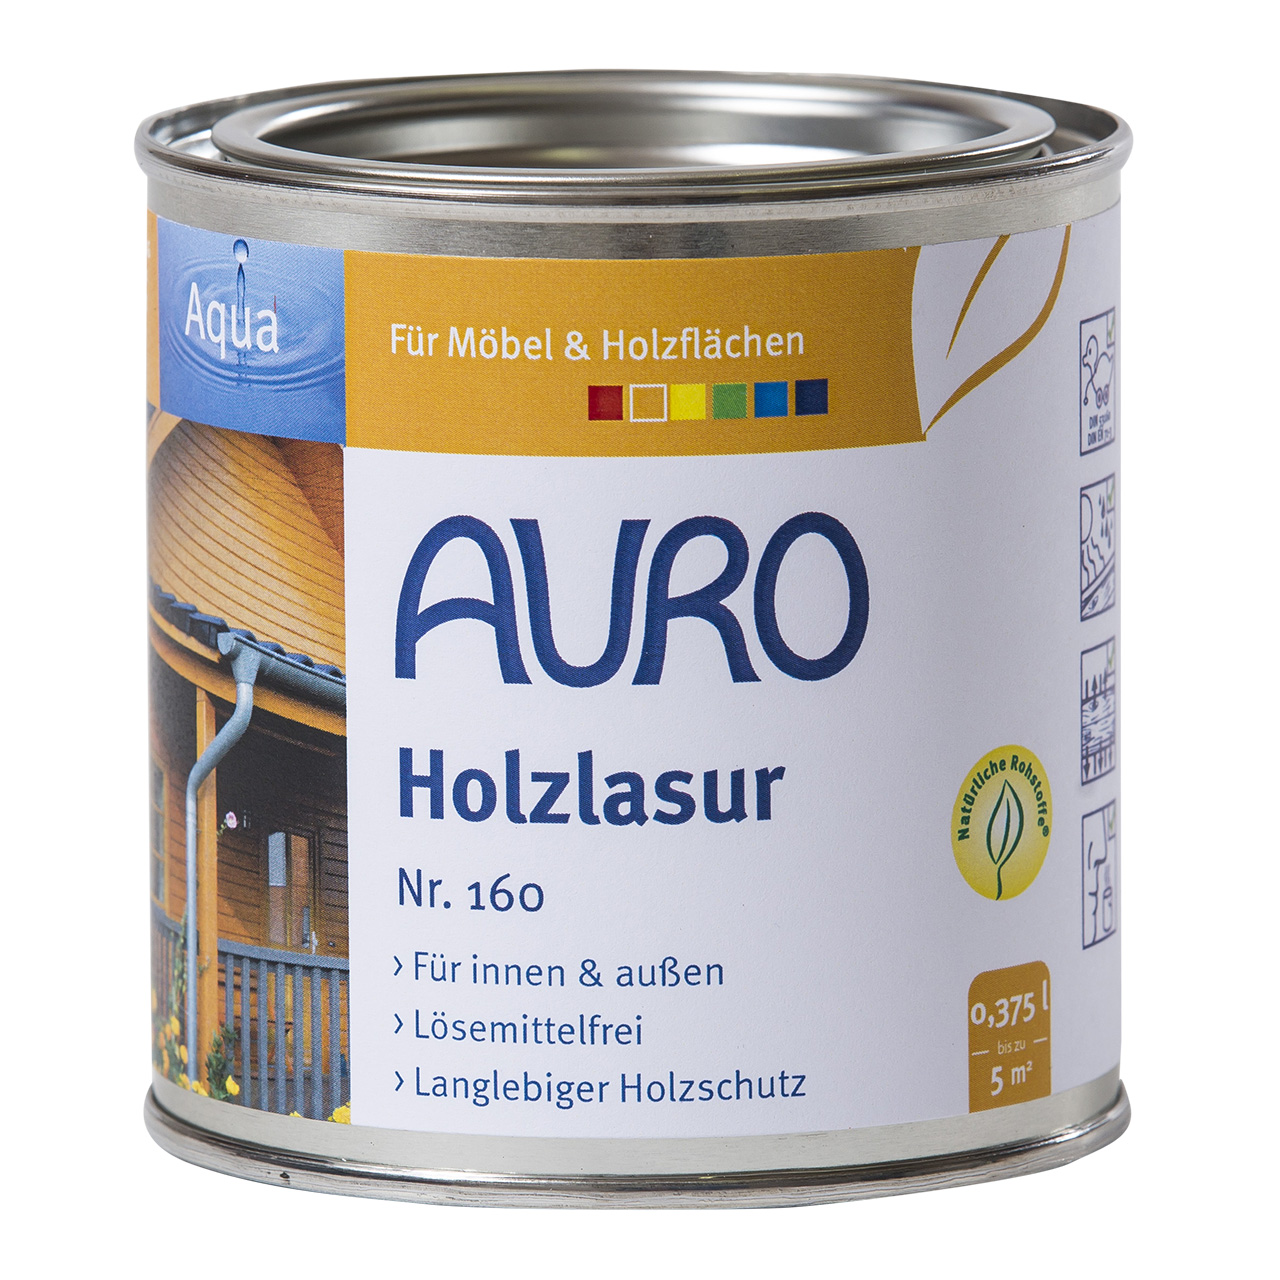 Auro Holzlasur Nr. 160 weiß, 0,375ml